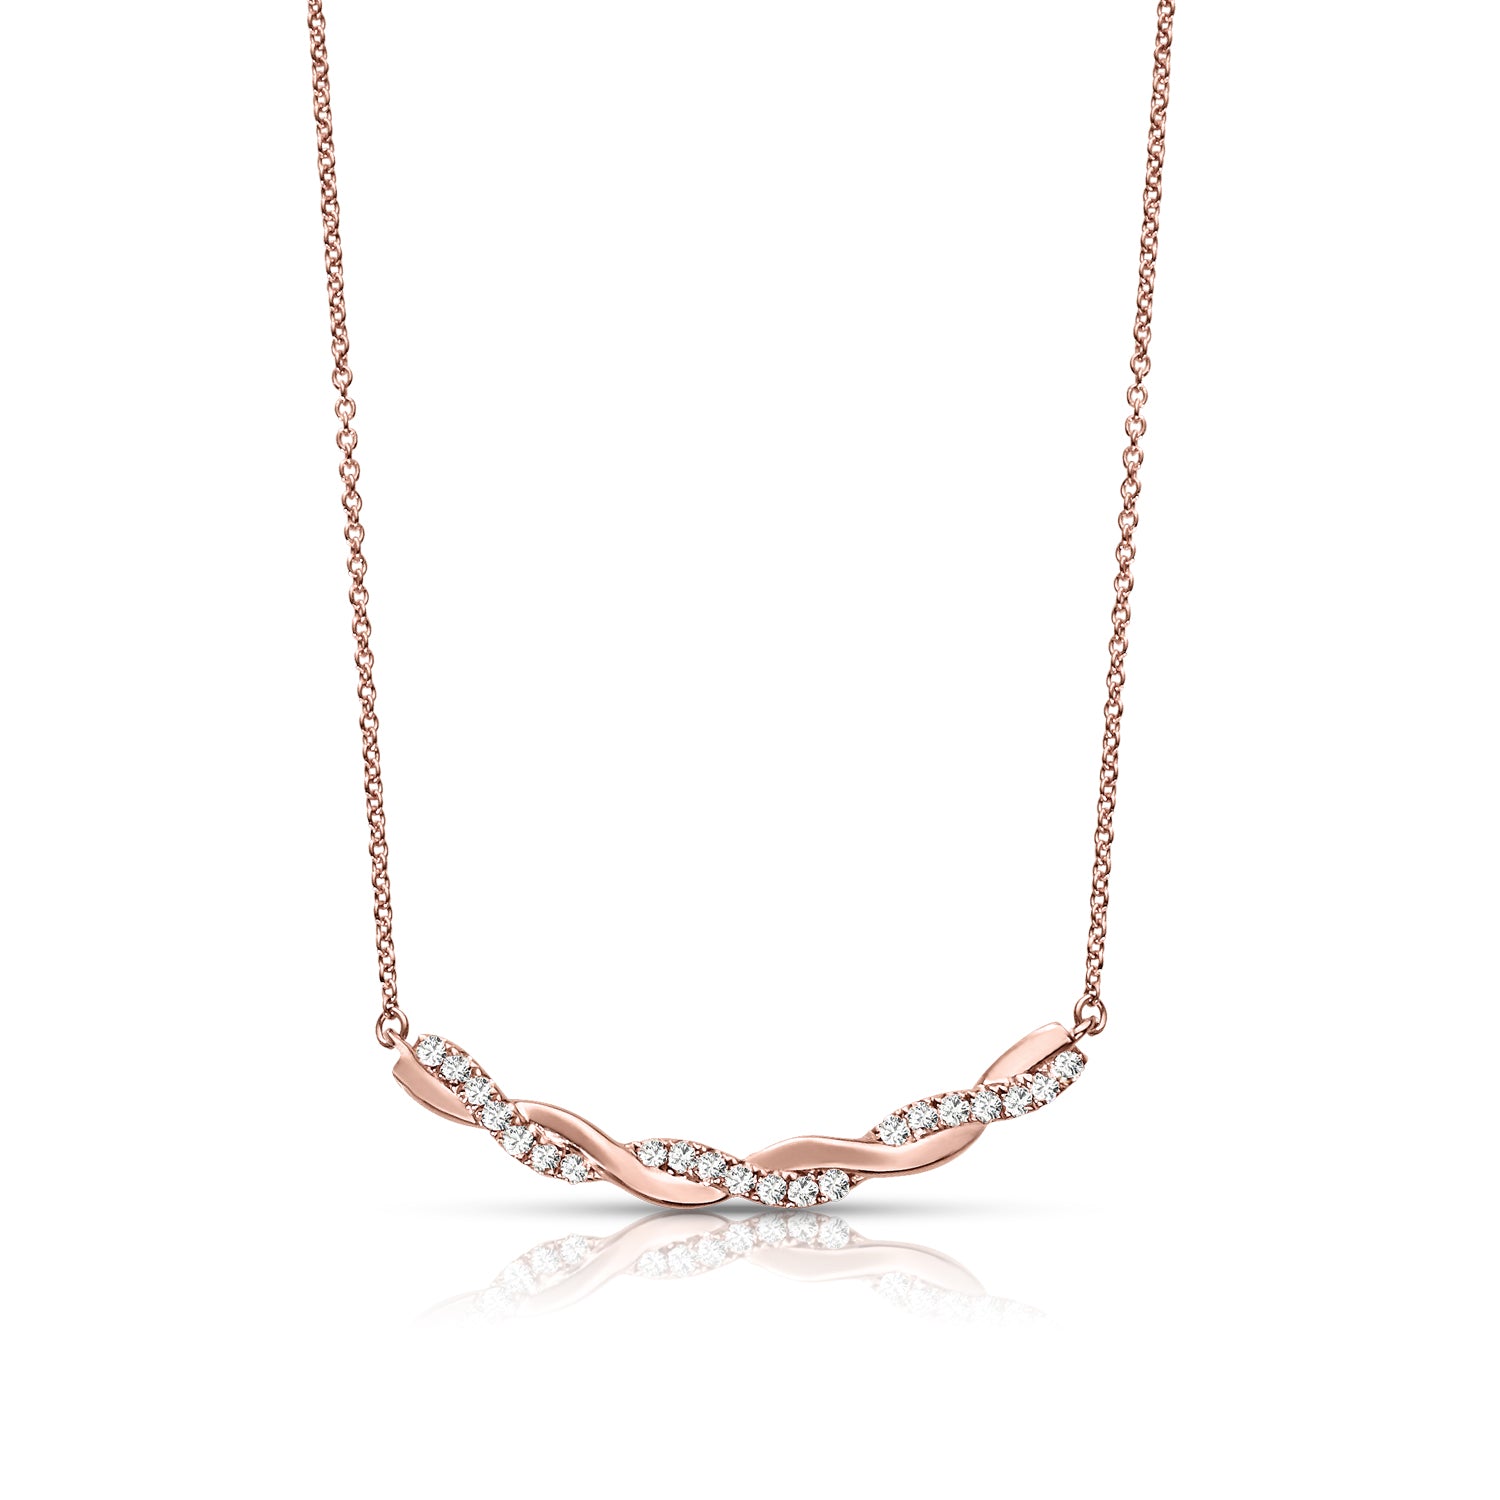 Criss Cross 0.20 ctw Diamond Necklace Pendant-in 14K/18K White, Yellow, Rose Gold and Platinum - Christmas Jewelry Gift -VIRABYANI